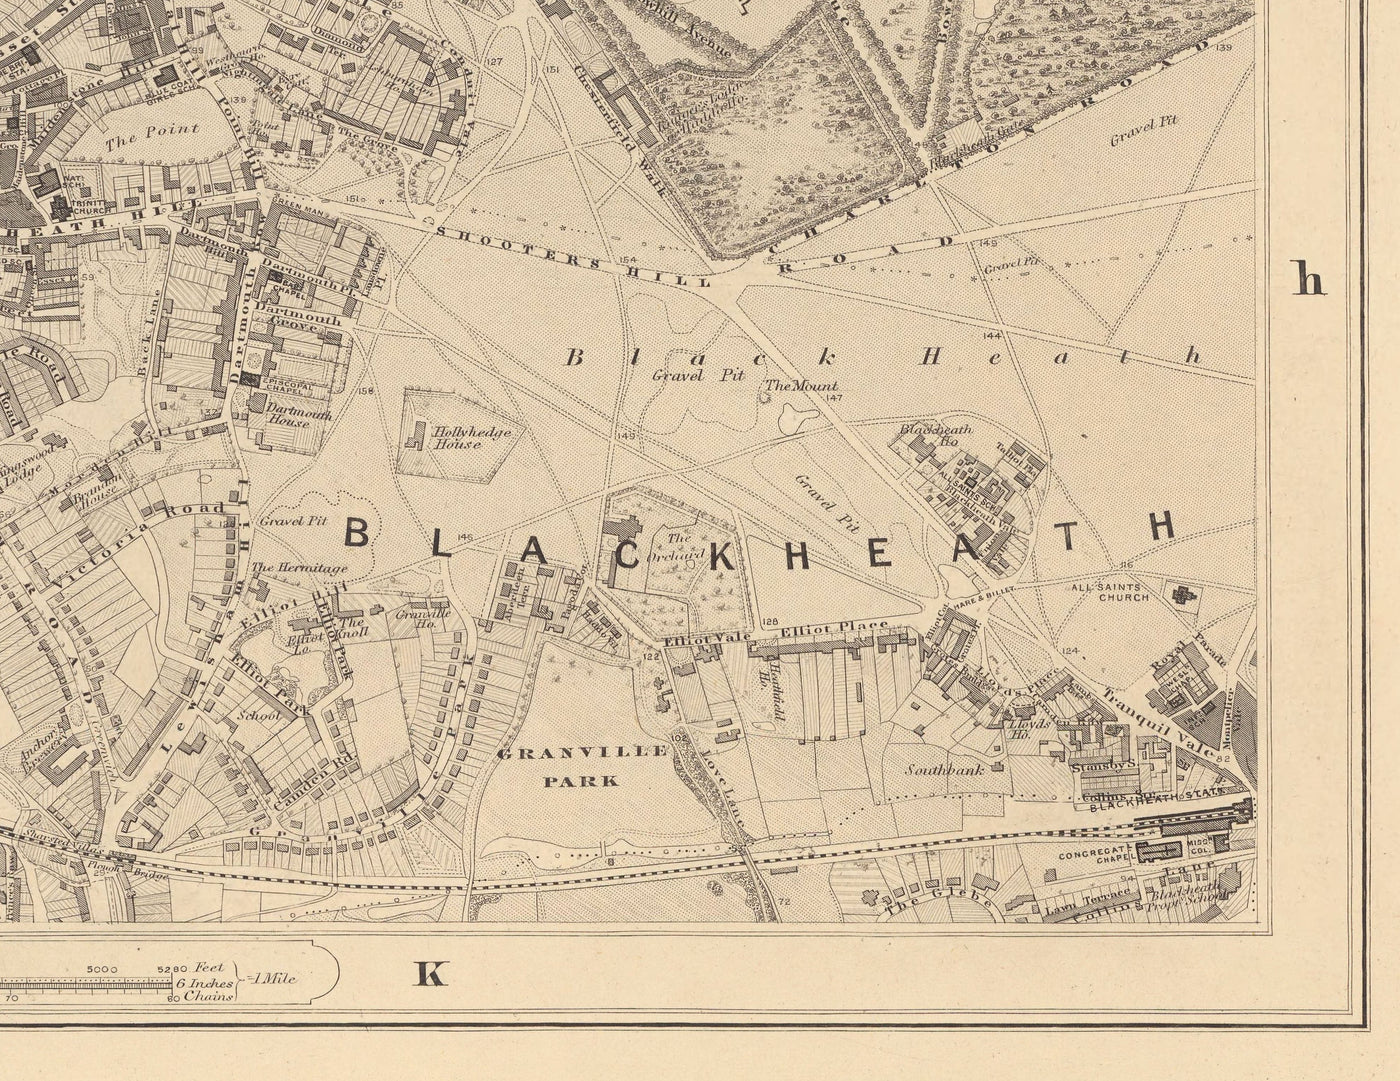 Mapa antiguo de South Londres en 1862 de Edward Stanford - Greenwich, Deptford, New Cross, Blackheath - SE8, SE14, SE10, SE4, SE13